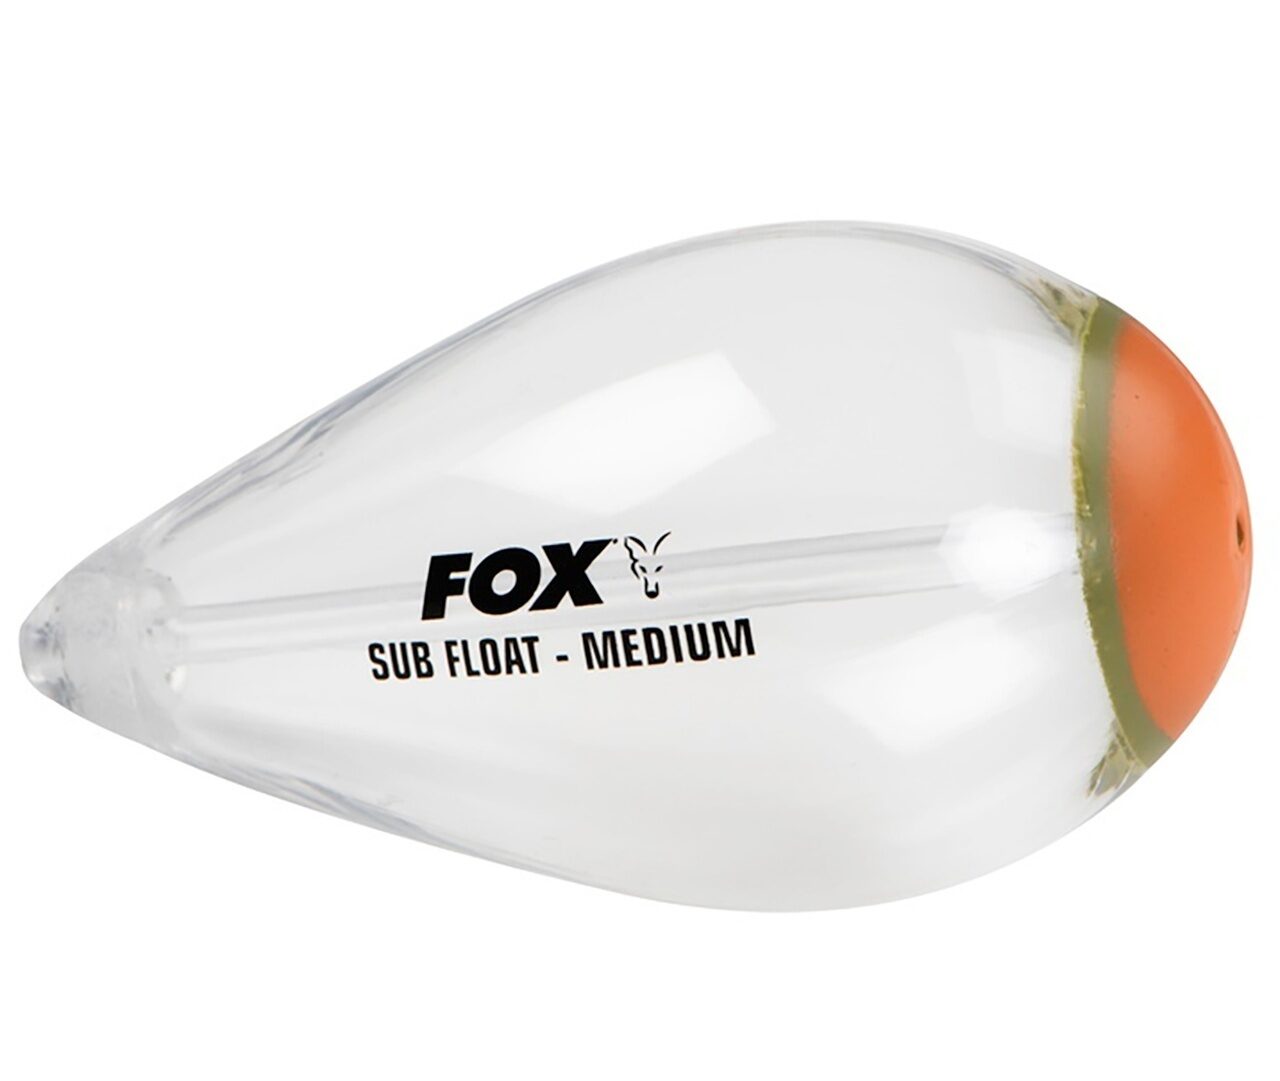 Поплавок контроллер Fox (Фокс) - Carp Subfloats Medium, Размер Средний, 2 шт